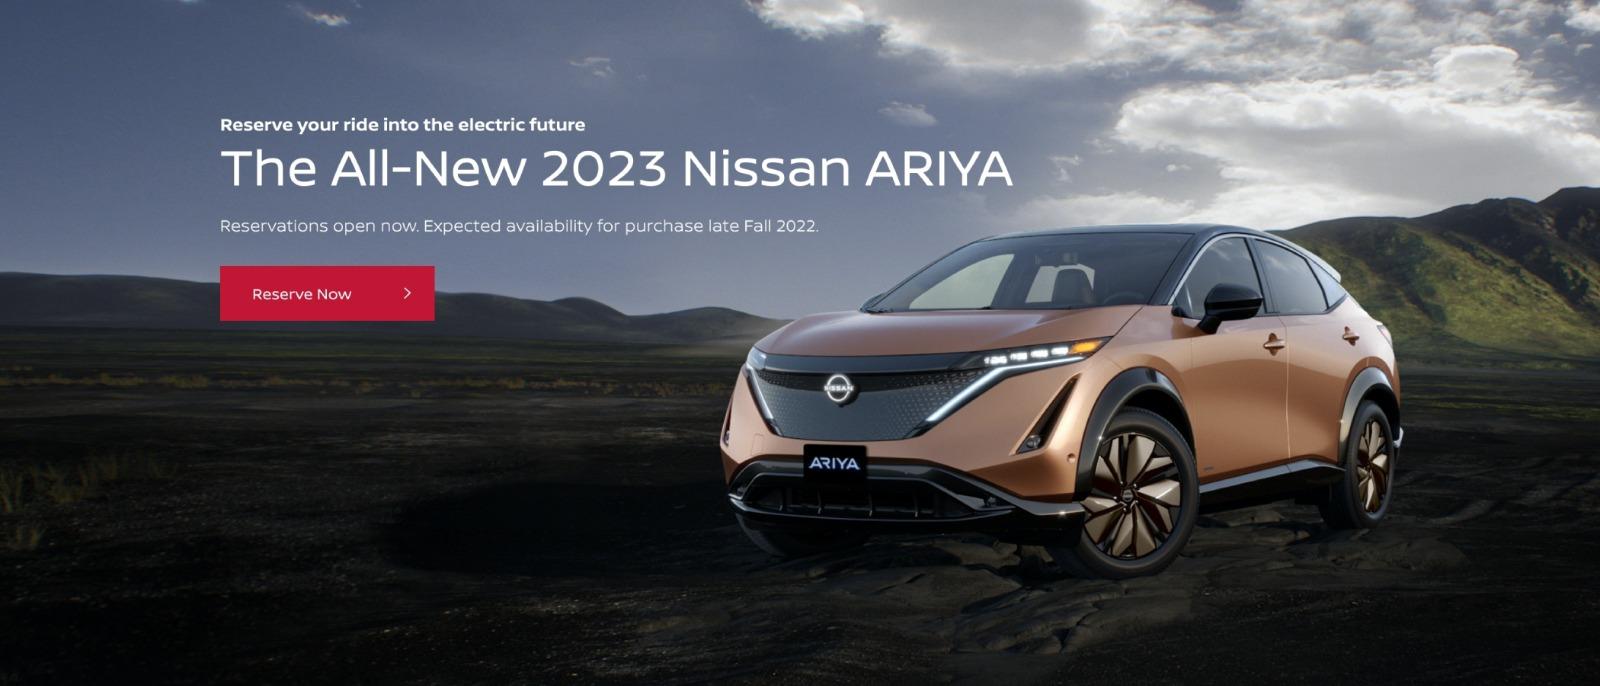 Reserve Nissan Ariya